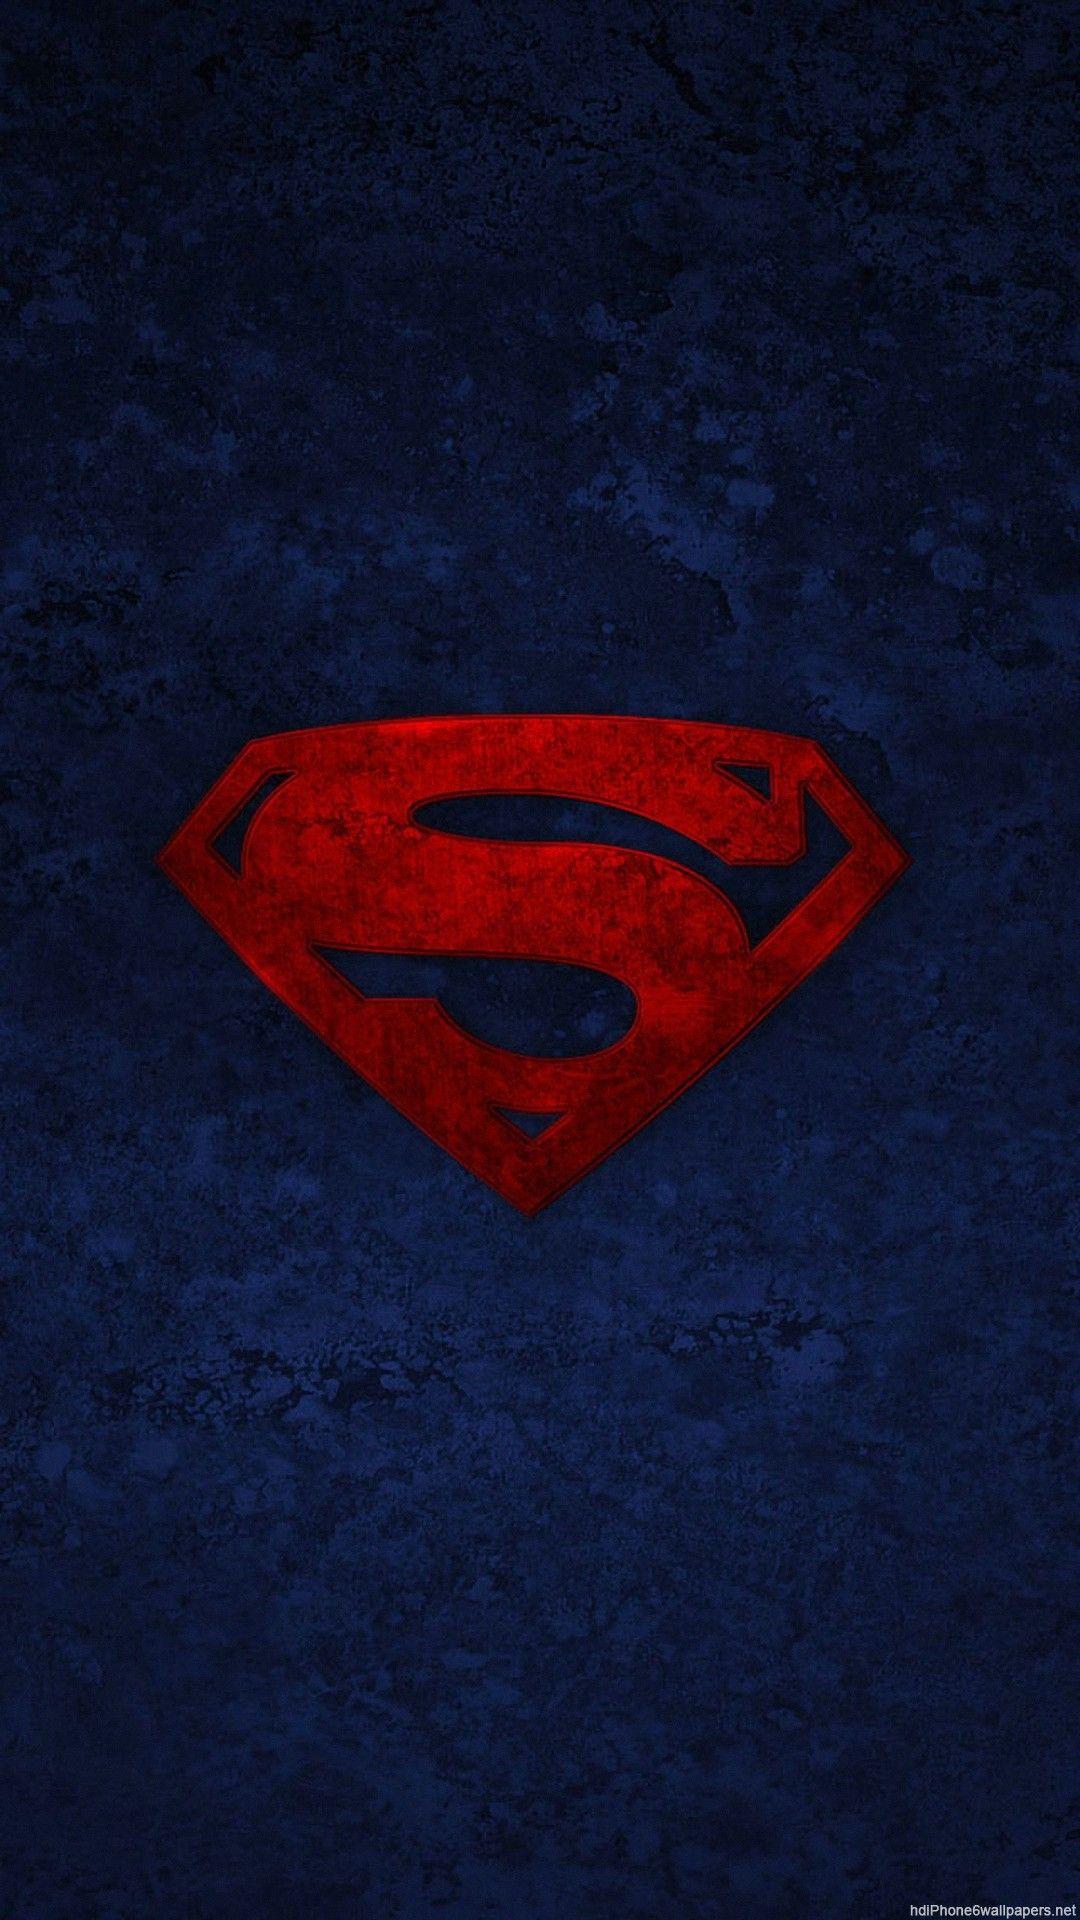 1080x1920 1080x1920 Superman logo iPhone 6 wallpapers HD